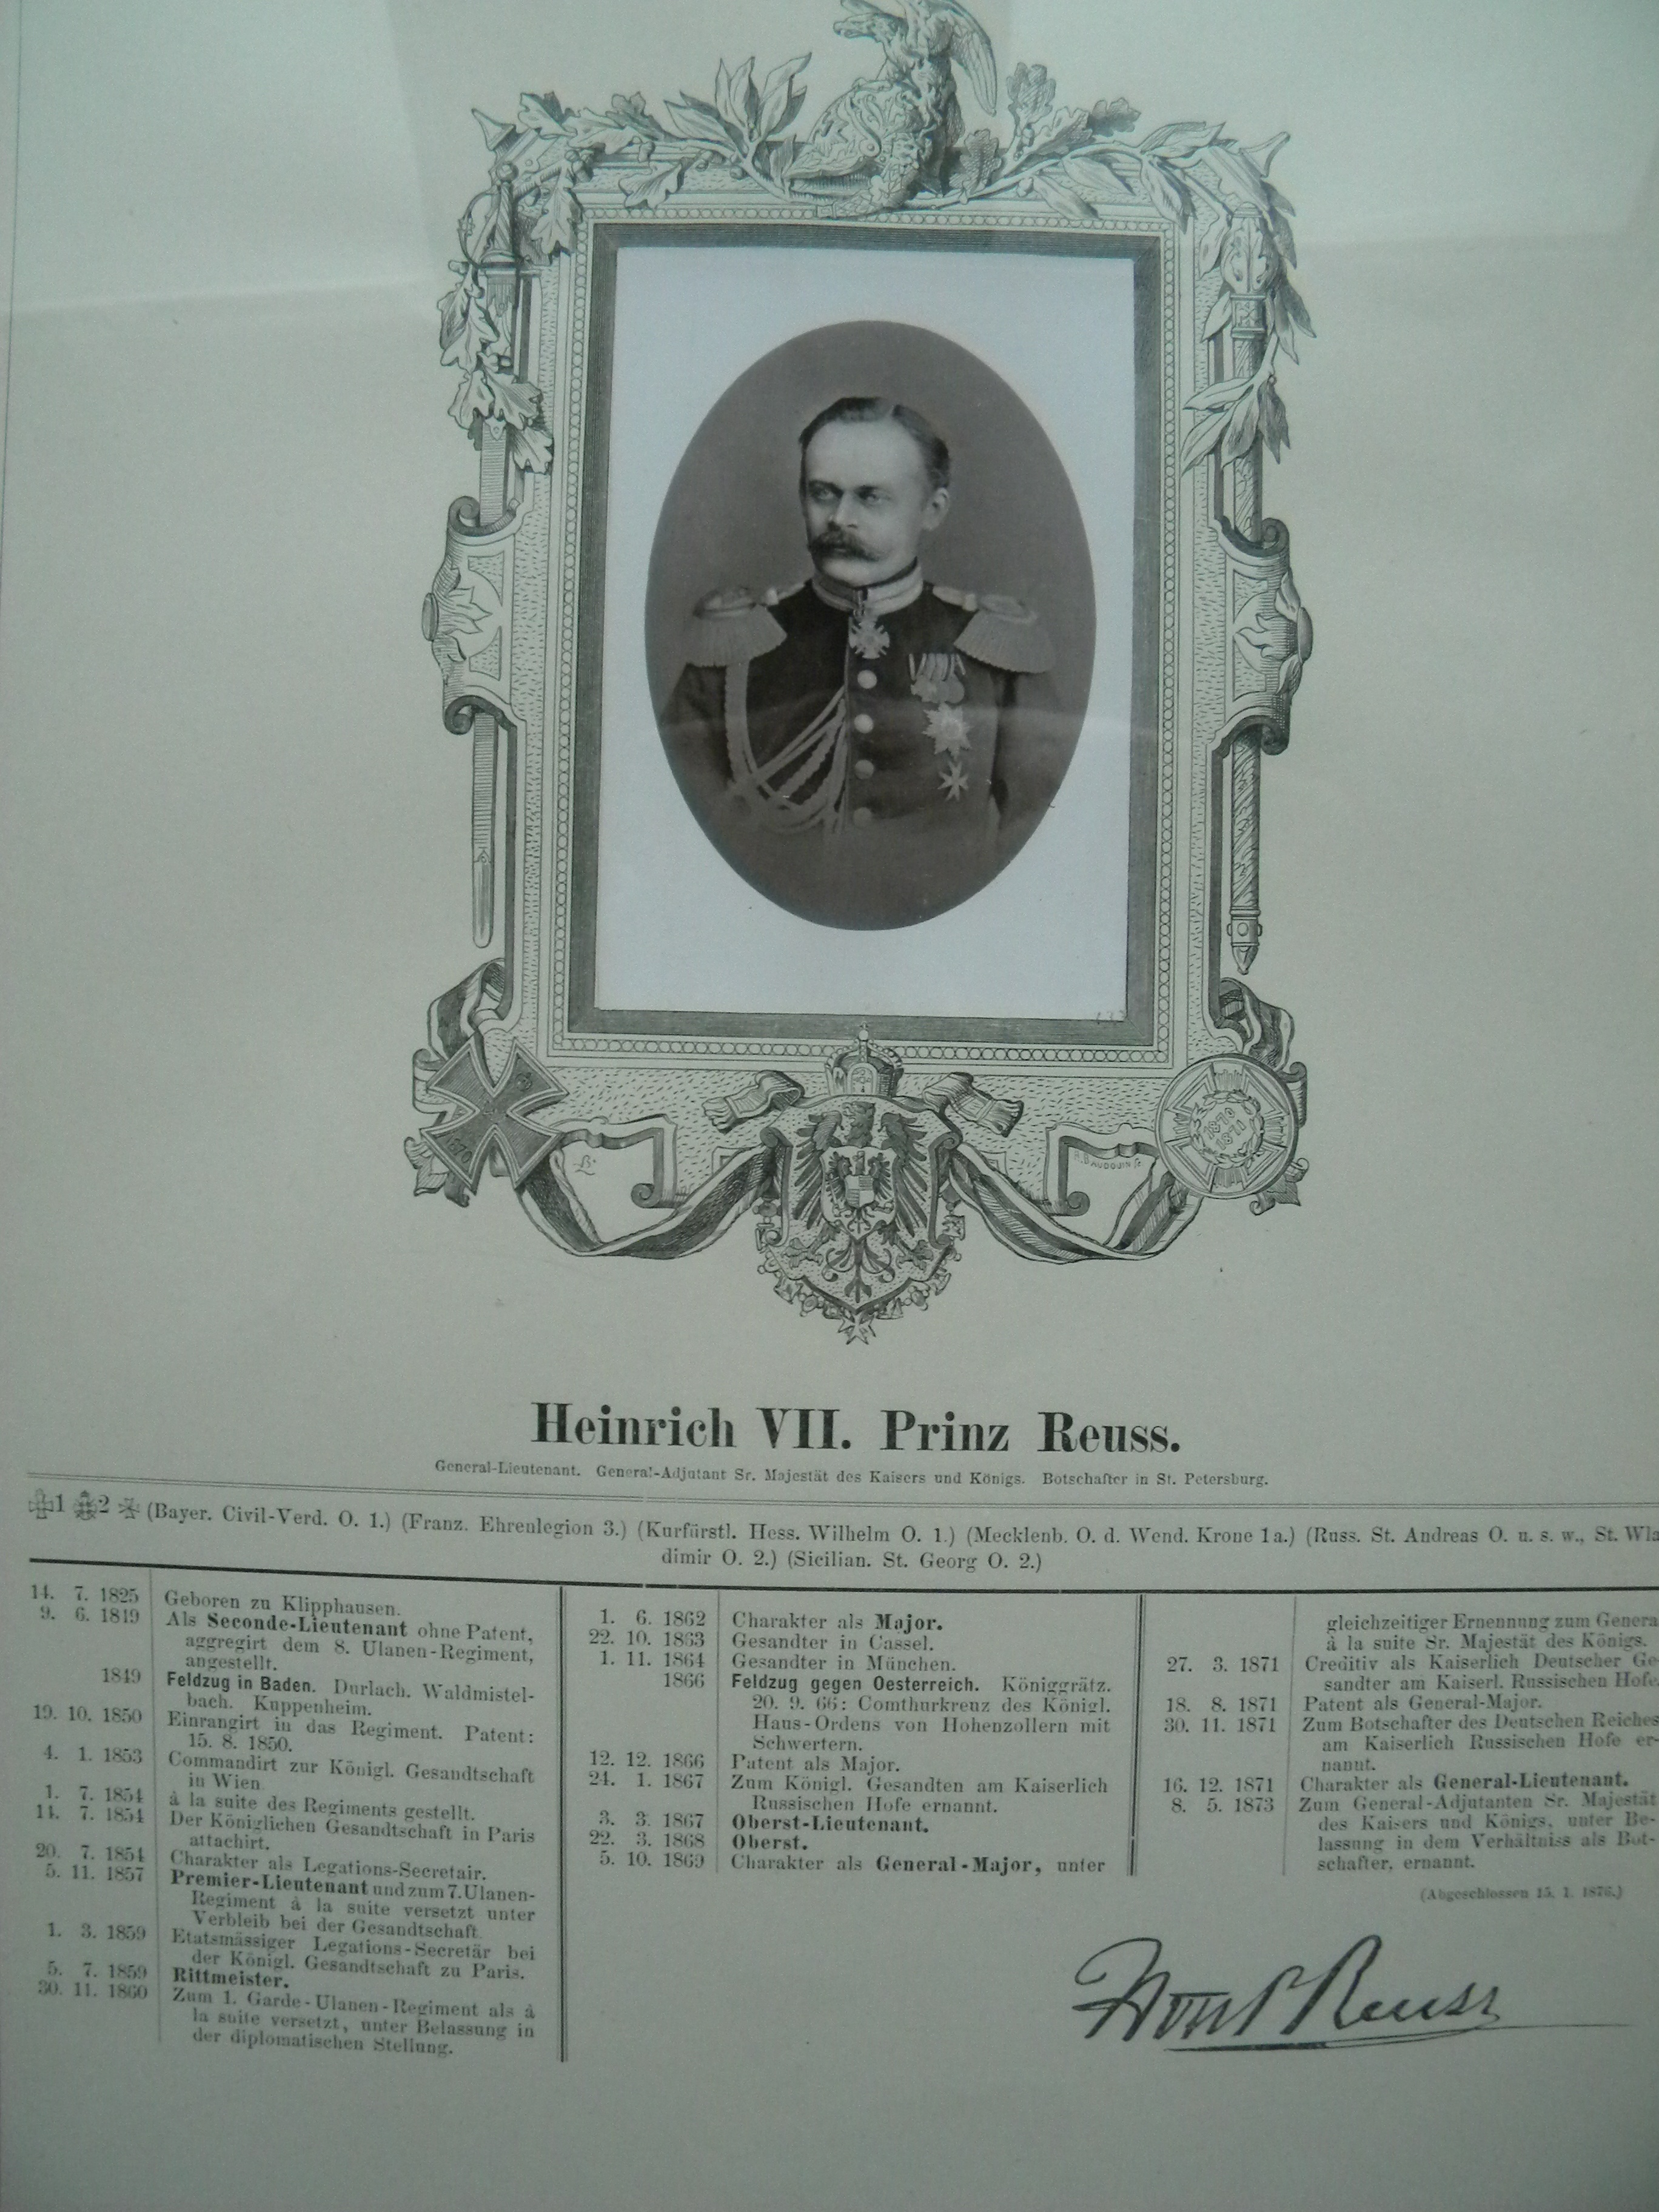 Heinrich VII. Prinz Reuss (Schloß Wernigerode GmbH RR-F)